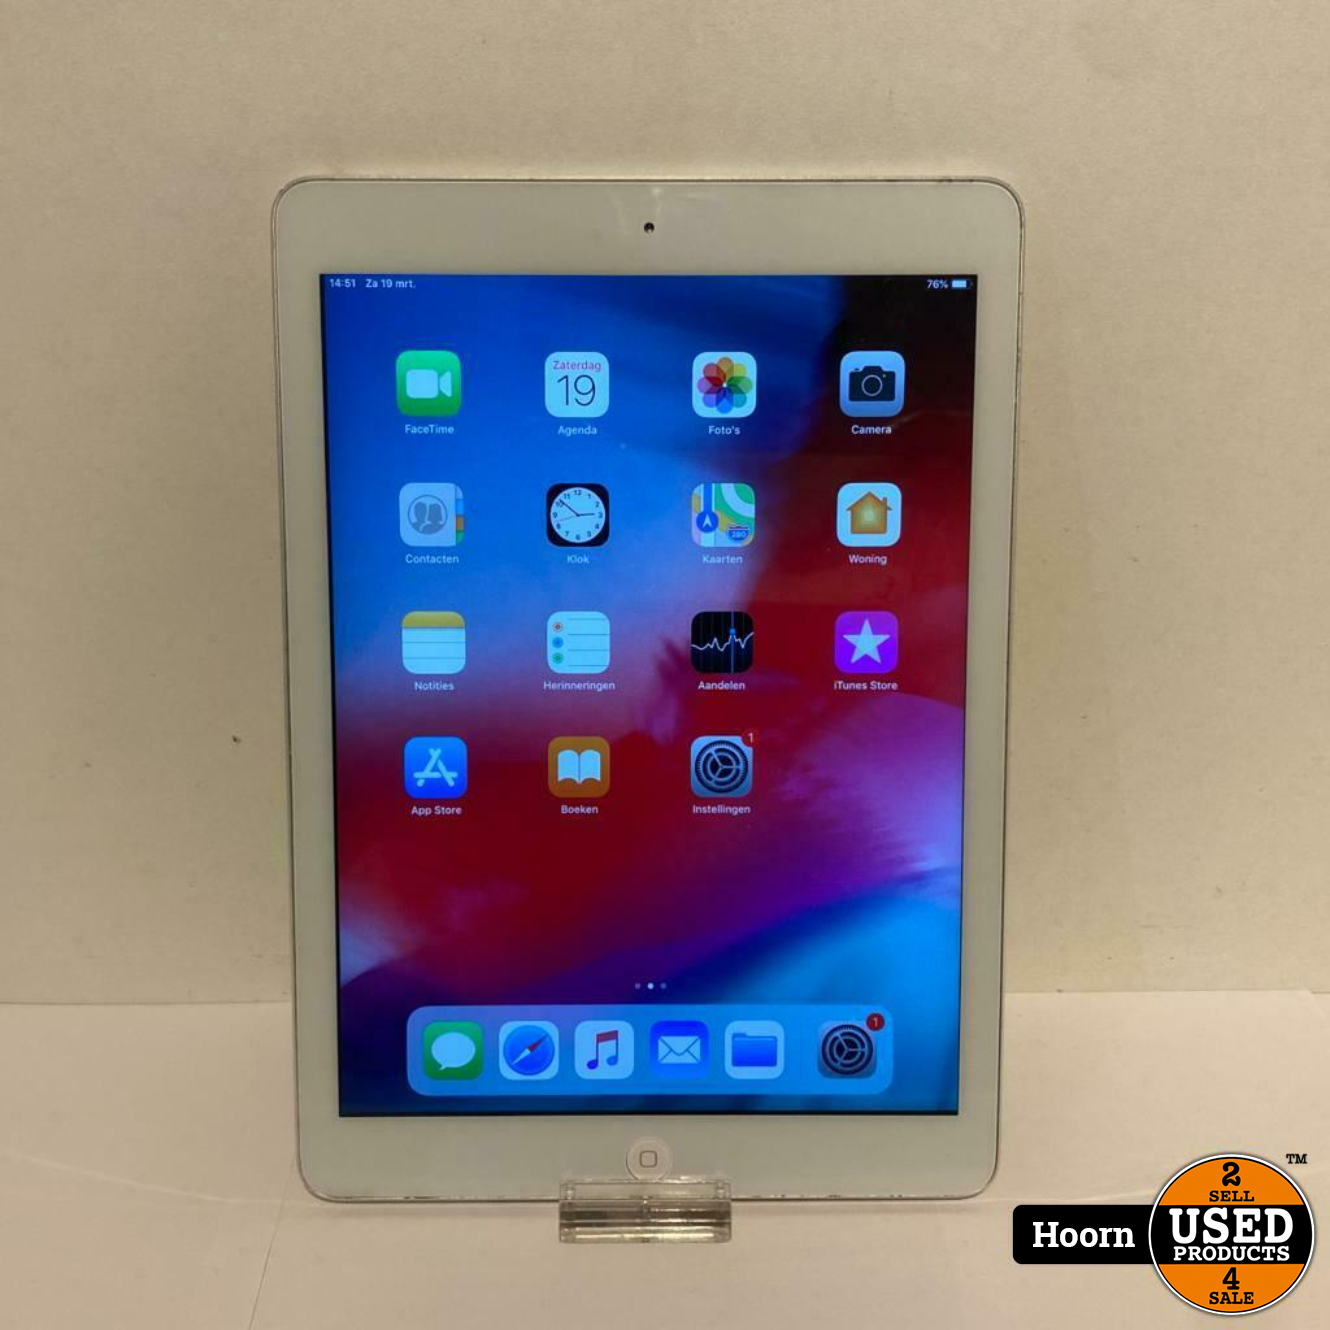 Vulkanisch opgroeien Visa Apple iPad iPad Air 1 16GB WiFi Silver Incl. Lader - Used Products Hoorn